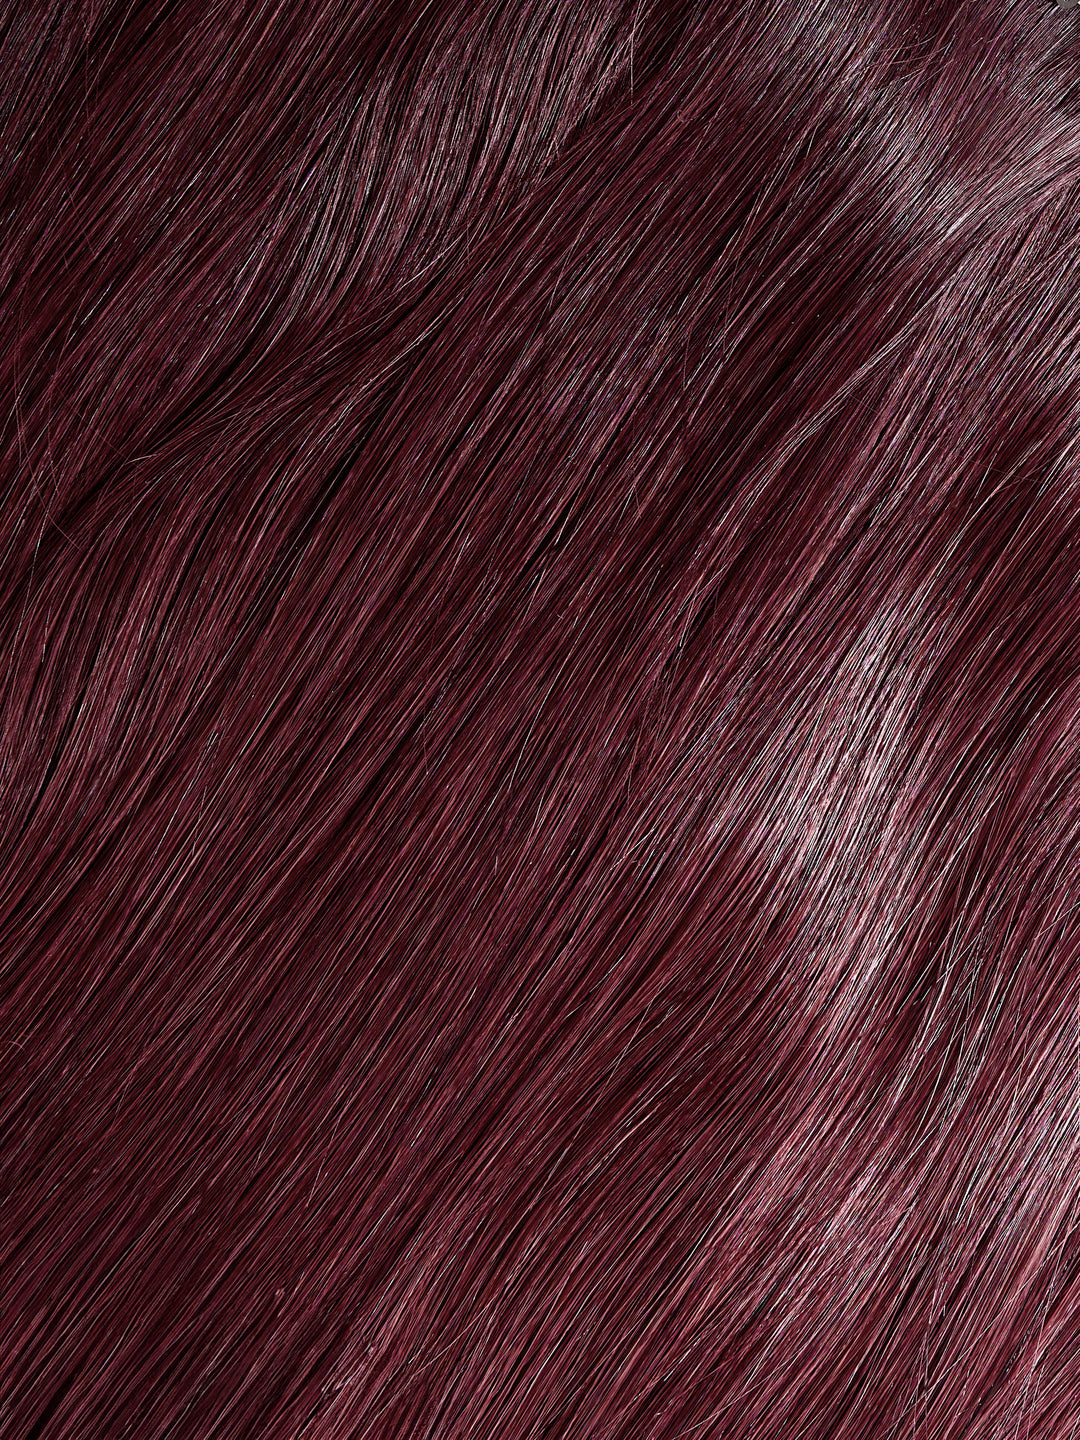 Dark Auburn Remy Hair Ponytail (20" and 130g)